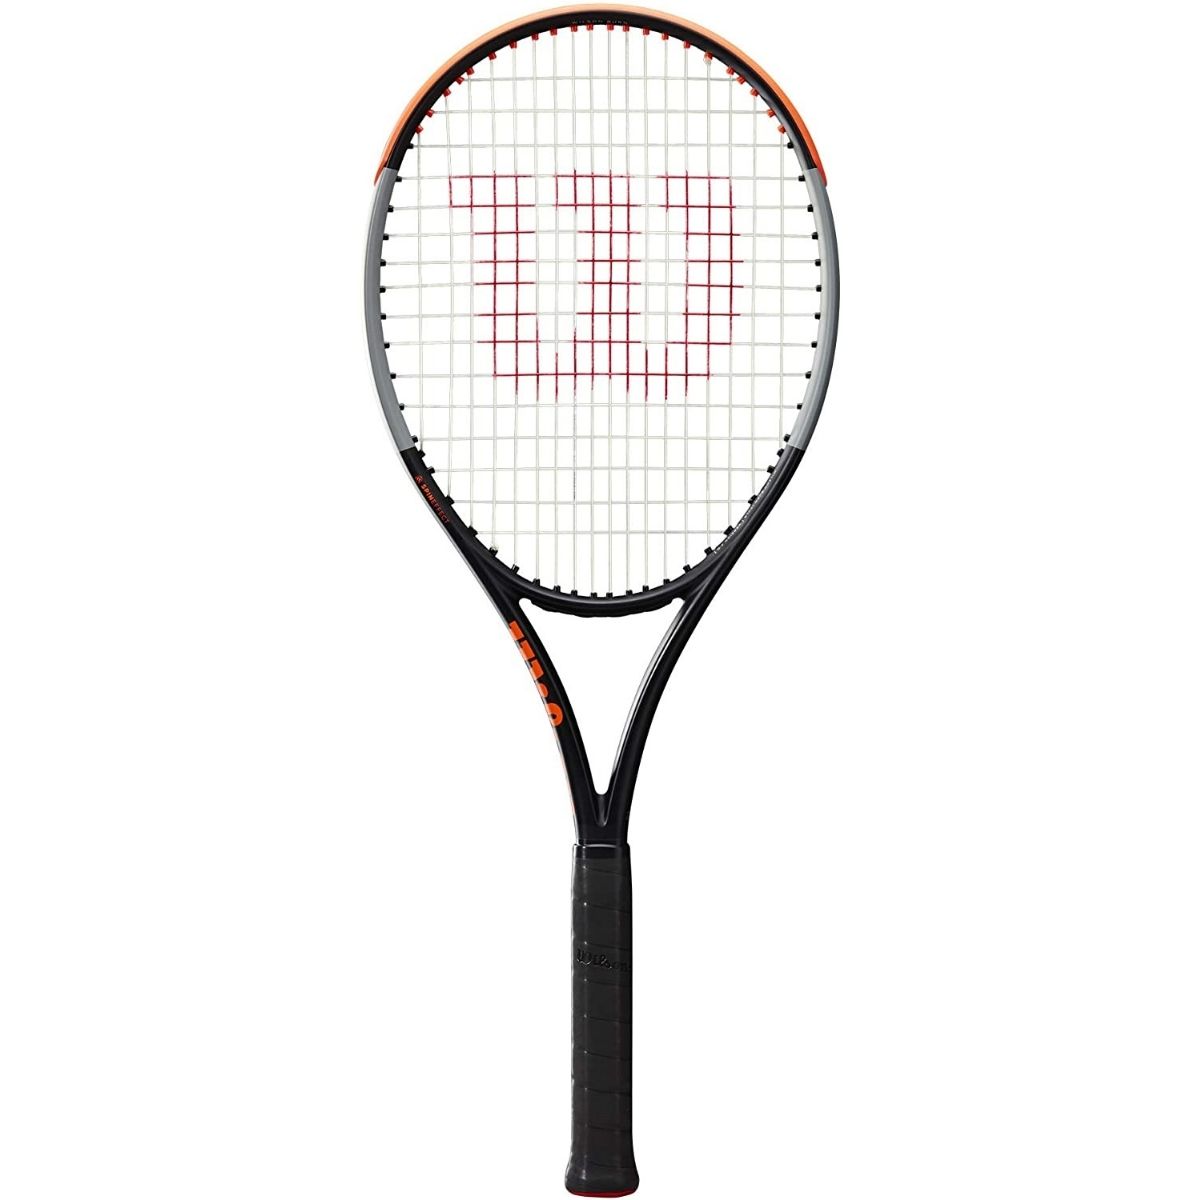 The Best Tennis Rackets for Beginners Options: Wilson Burn 100LS v4